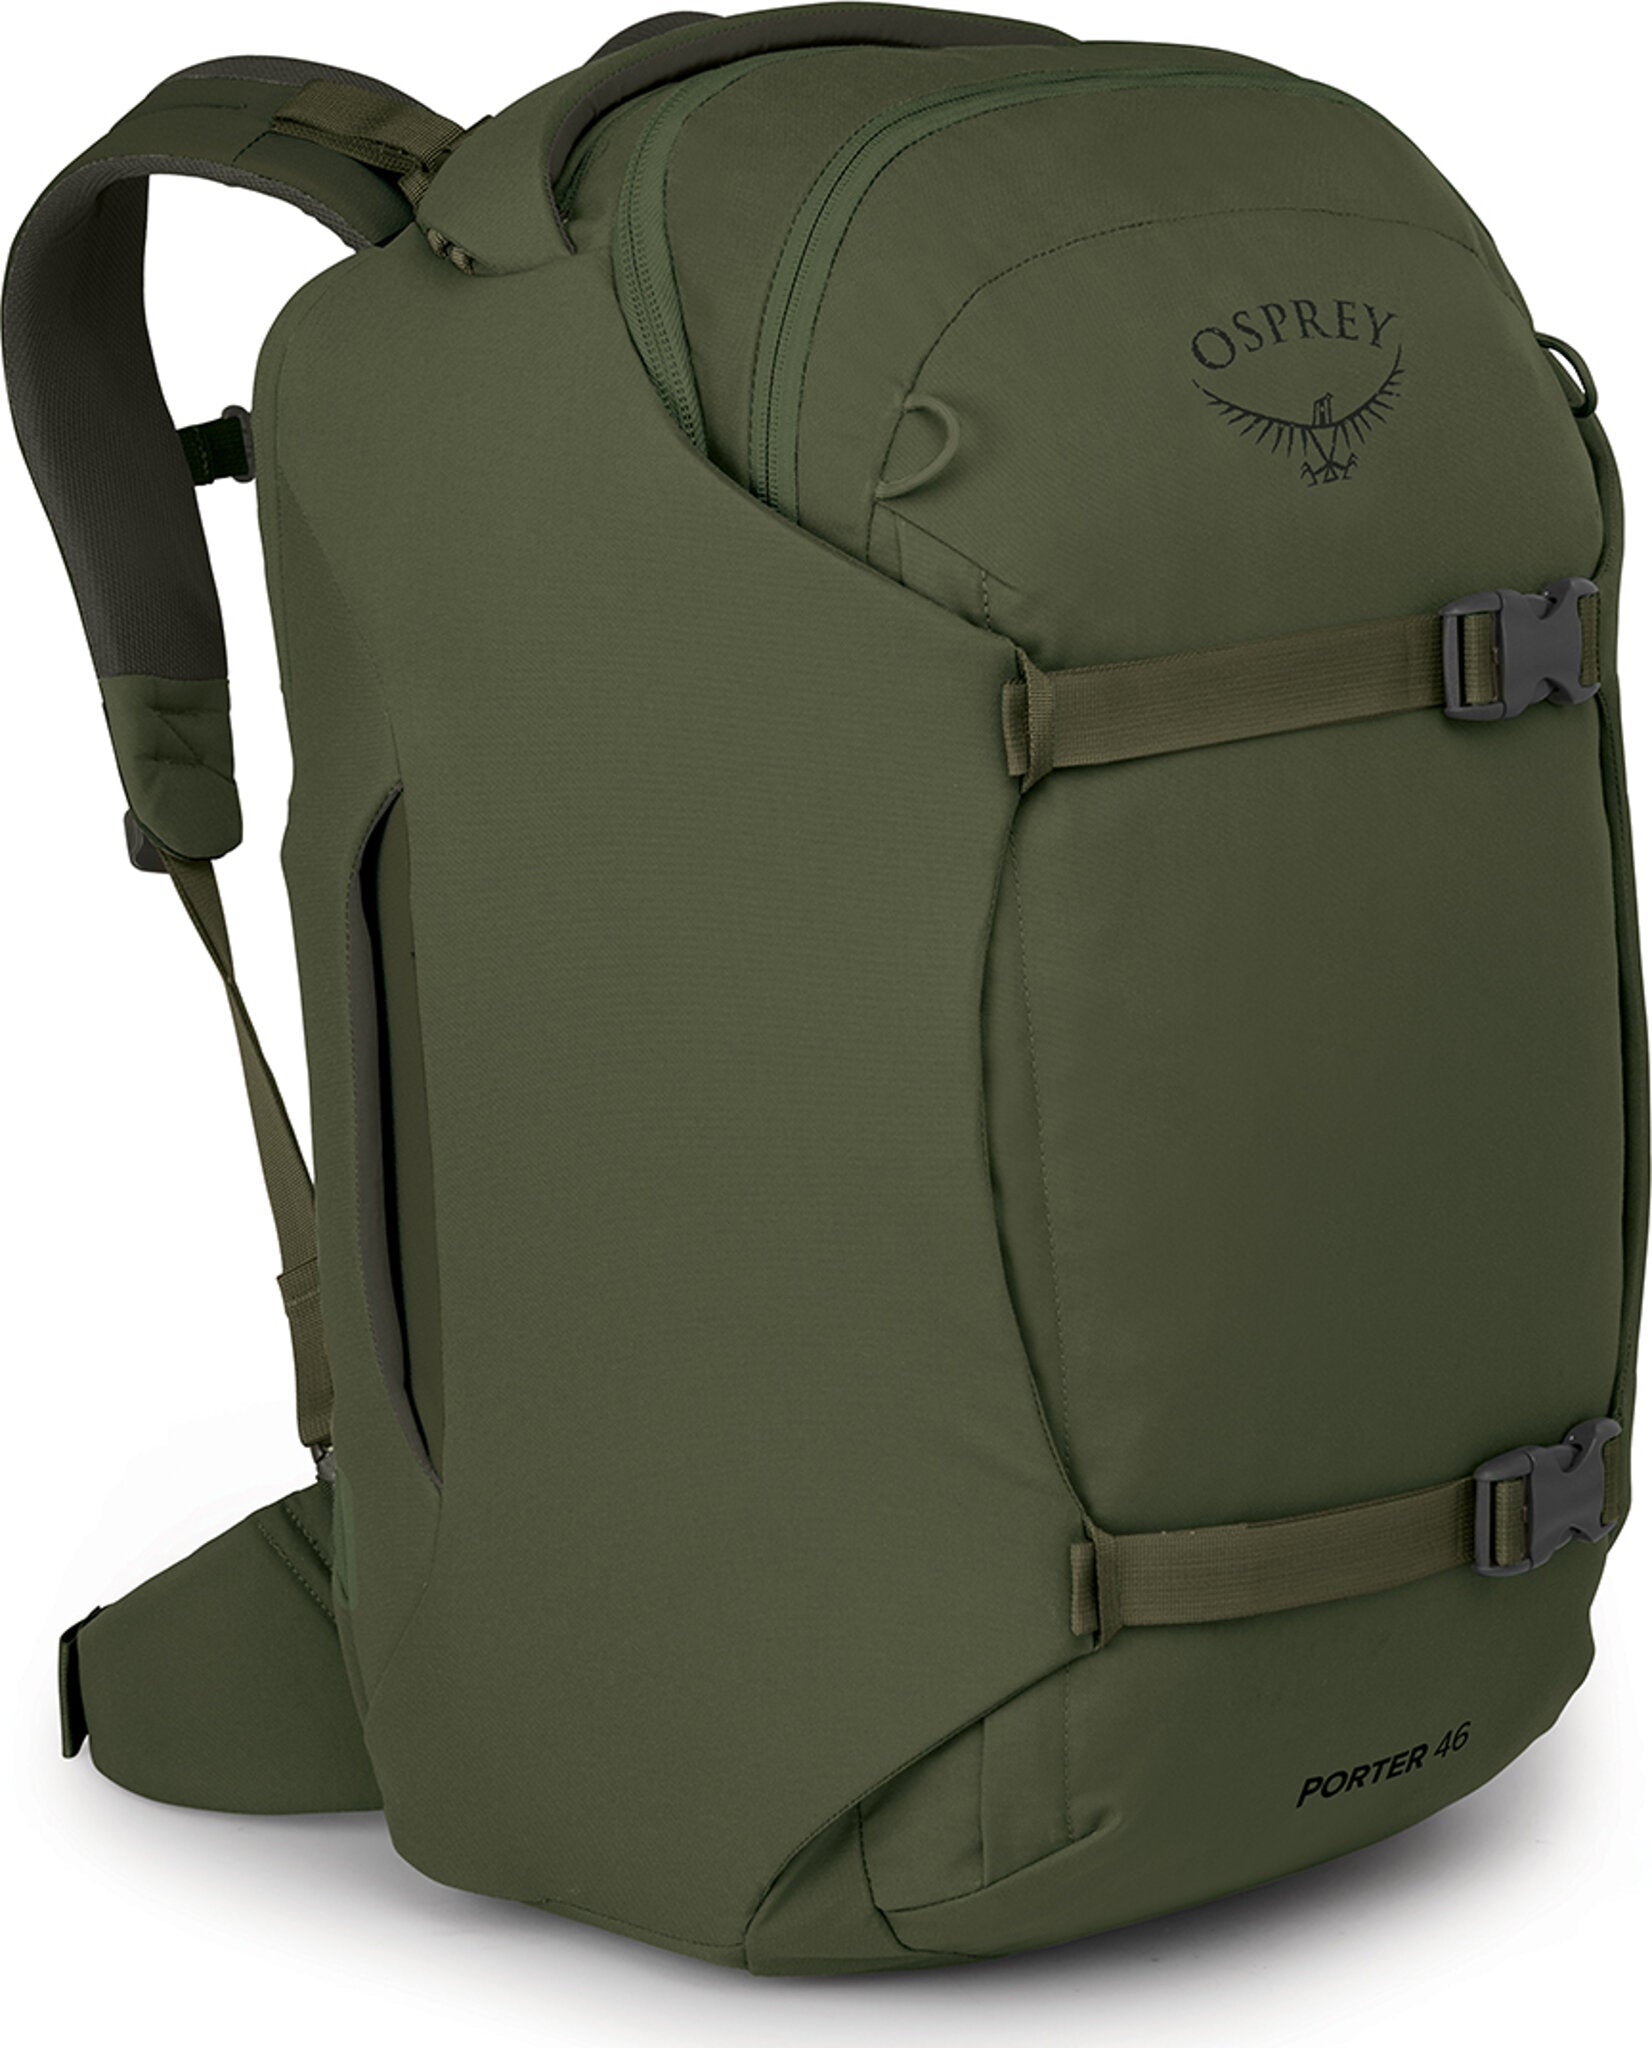 Osprey Porter Travel Pack - 46L